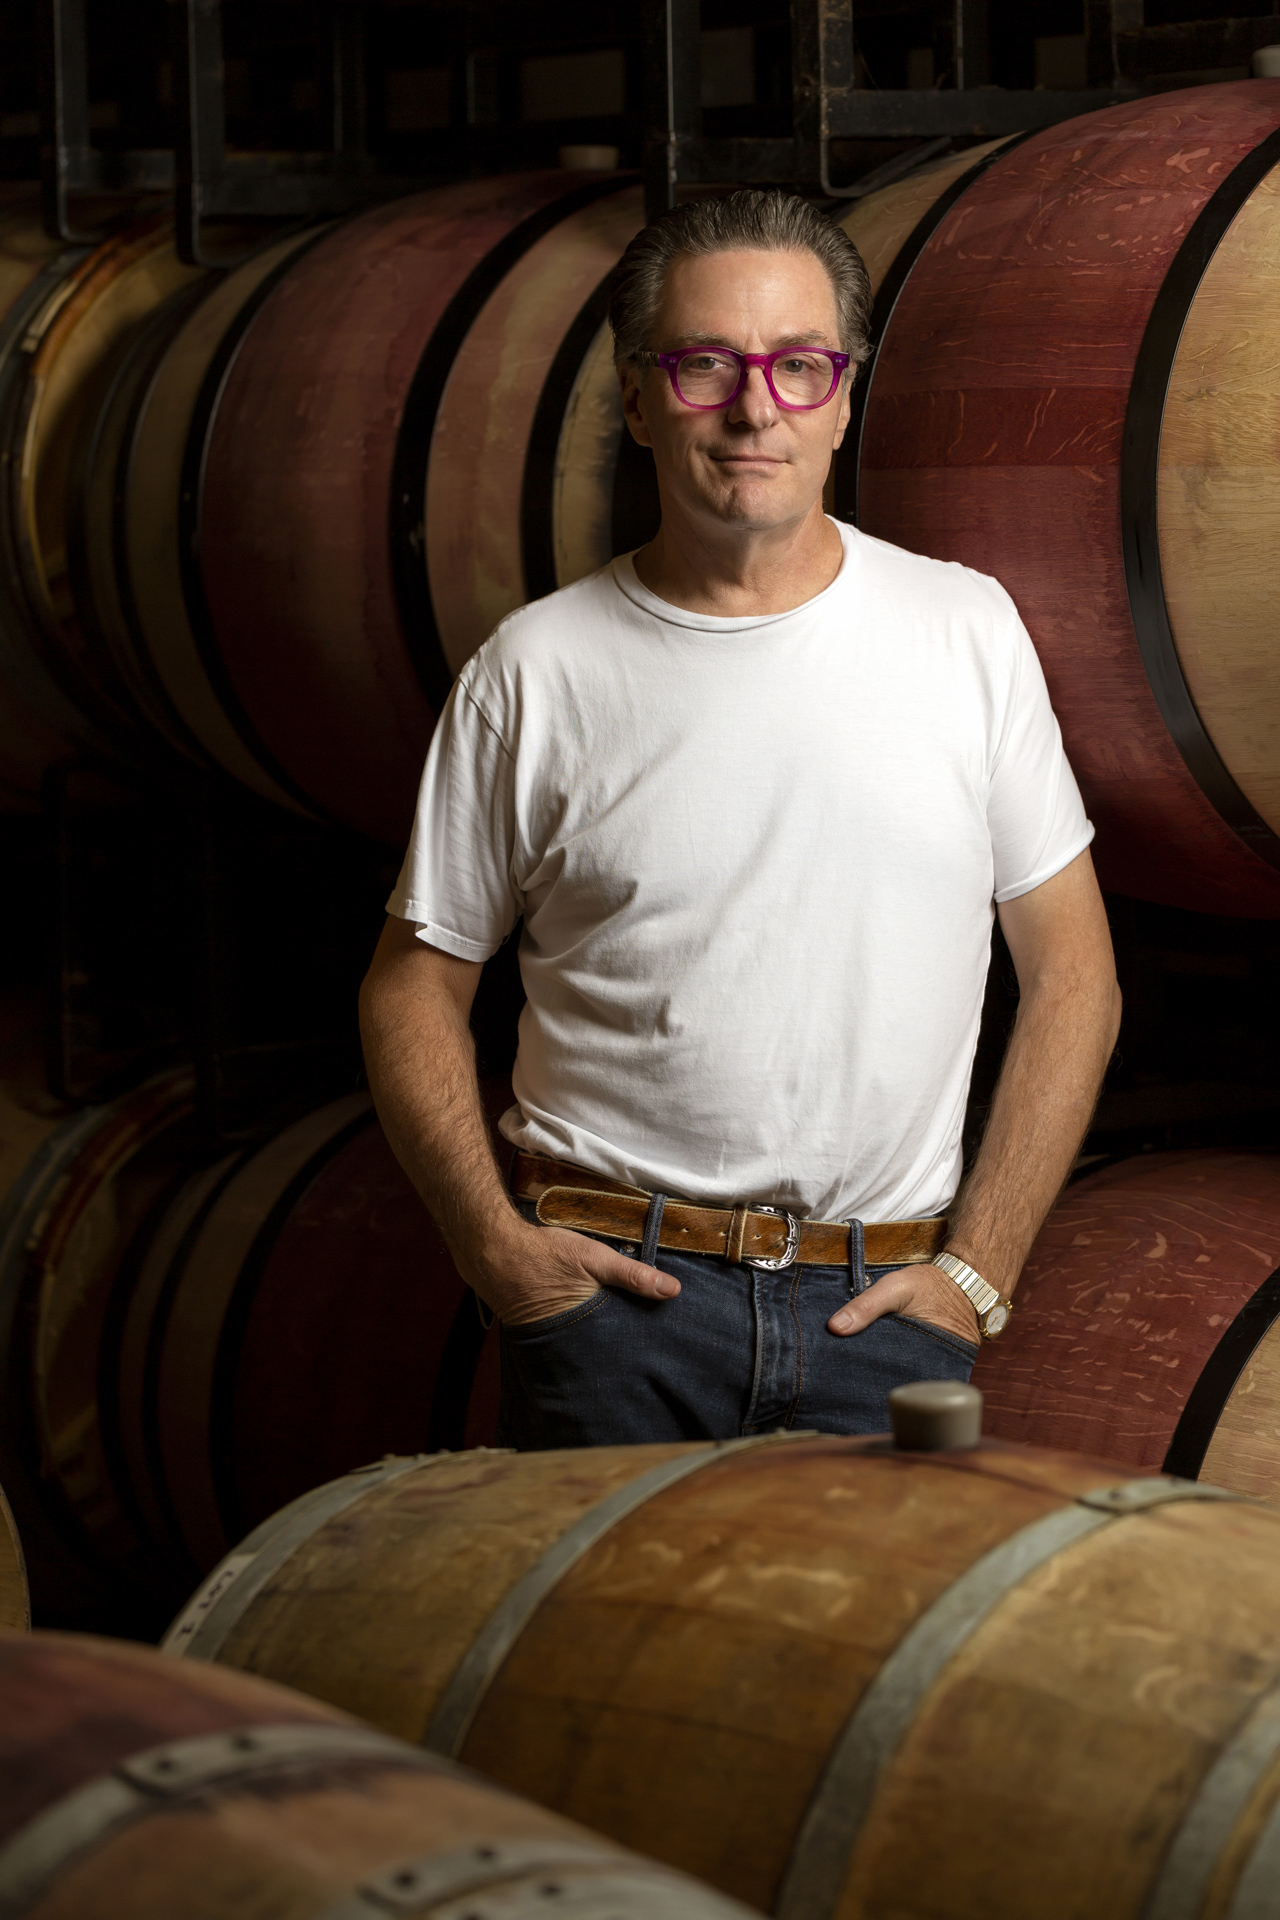 Vance Rose Winemaker Portrait by Frank Gutierrez